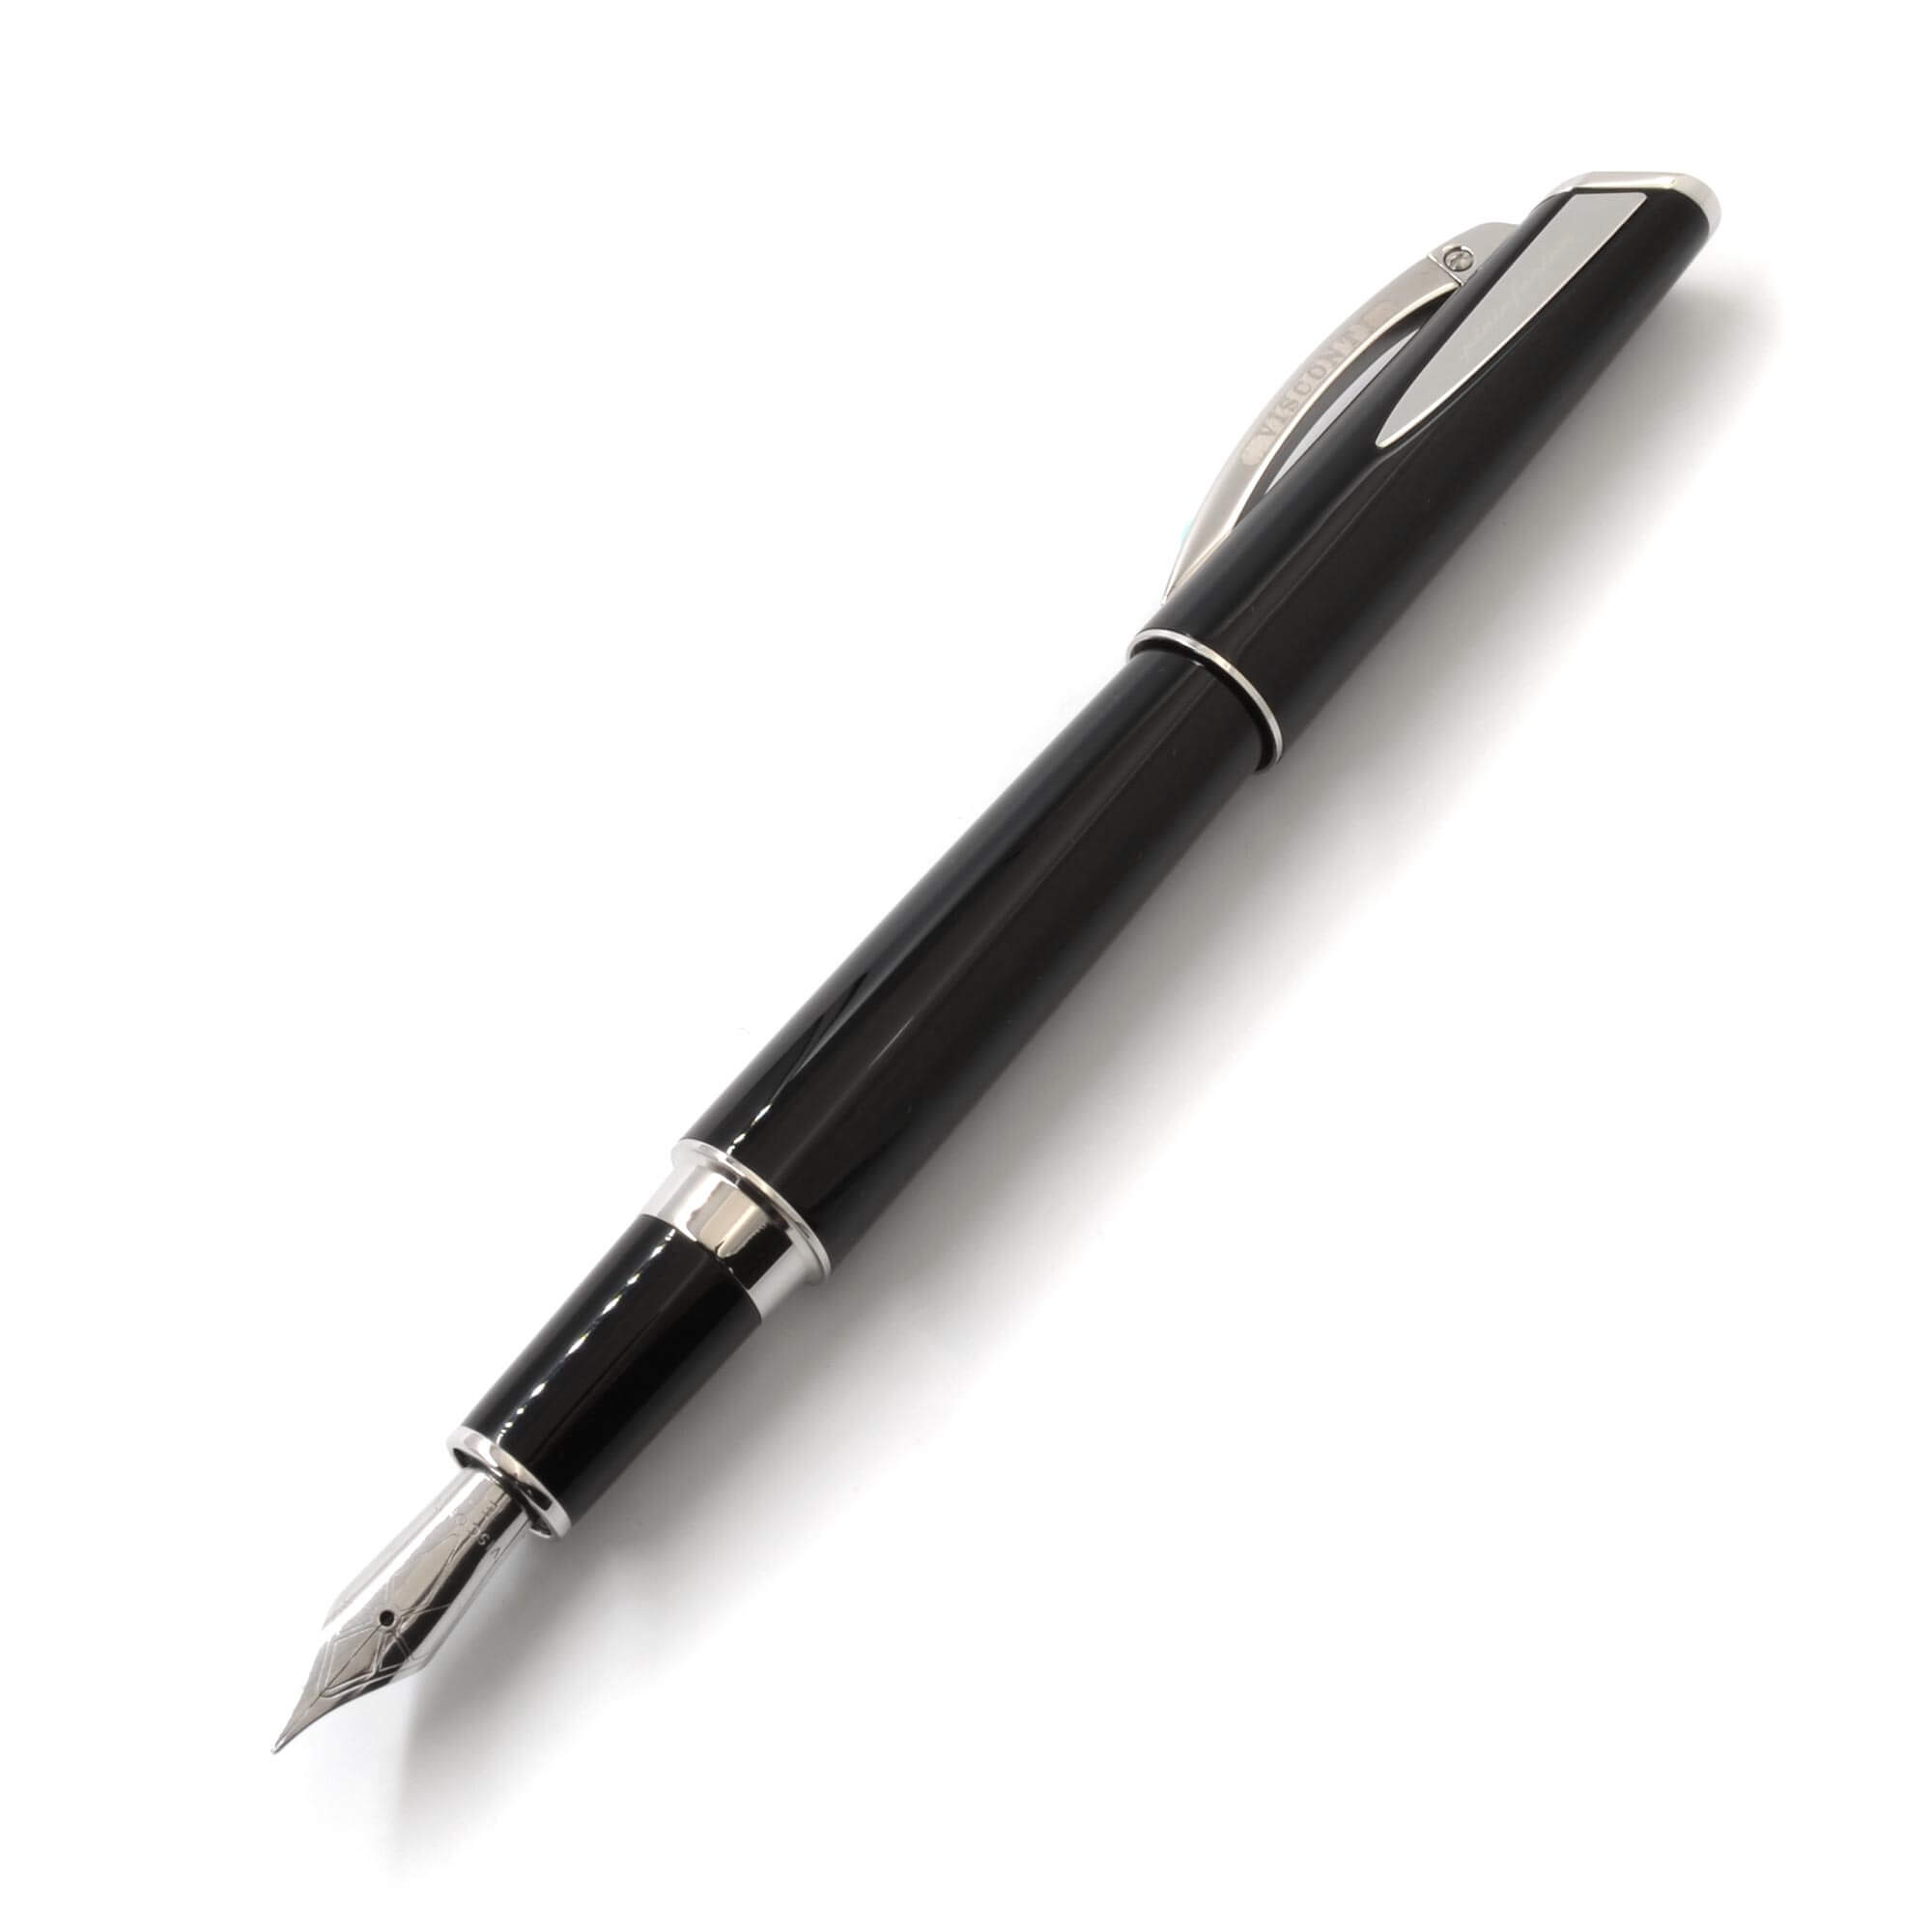 Visconti Fountain Pen - Pininfarina Black Resin and Silver Tone (Discount Code HD124) $159.76 with free shipping